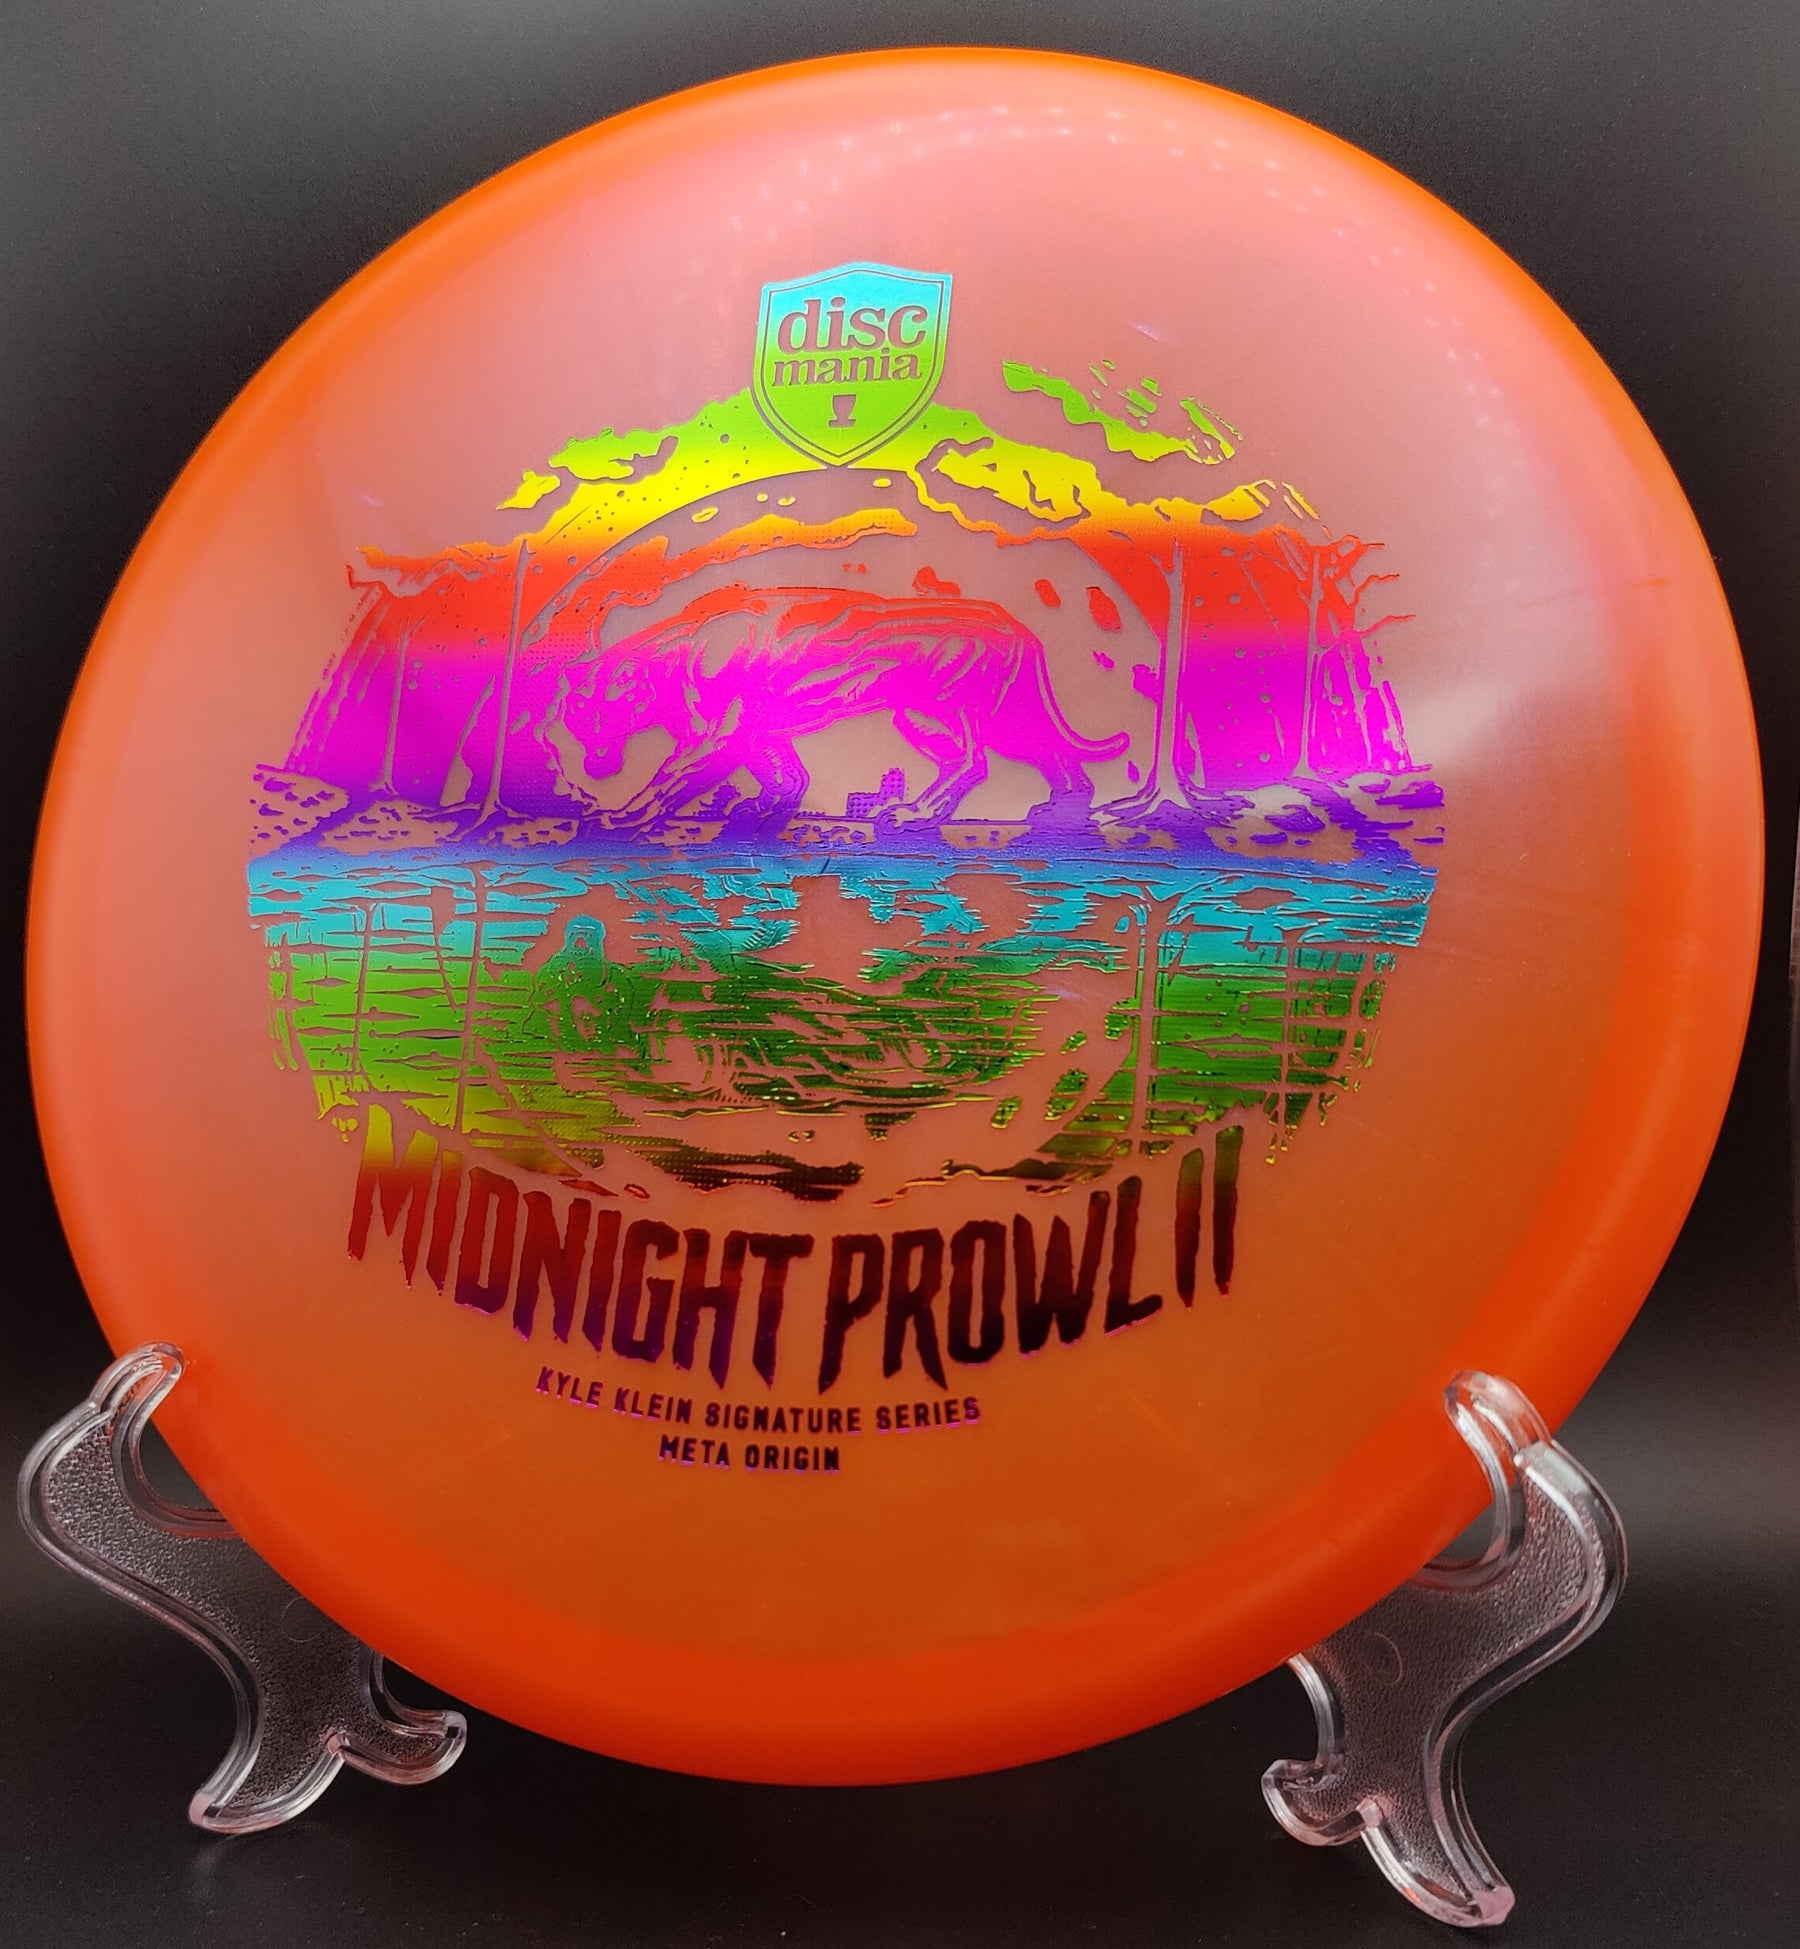 Discmania Midnight Prowl 2 - Meta Origin Kyle Klein Signature Series